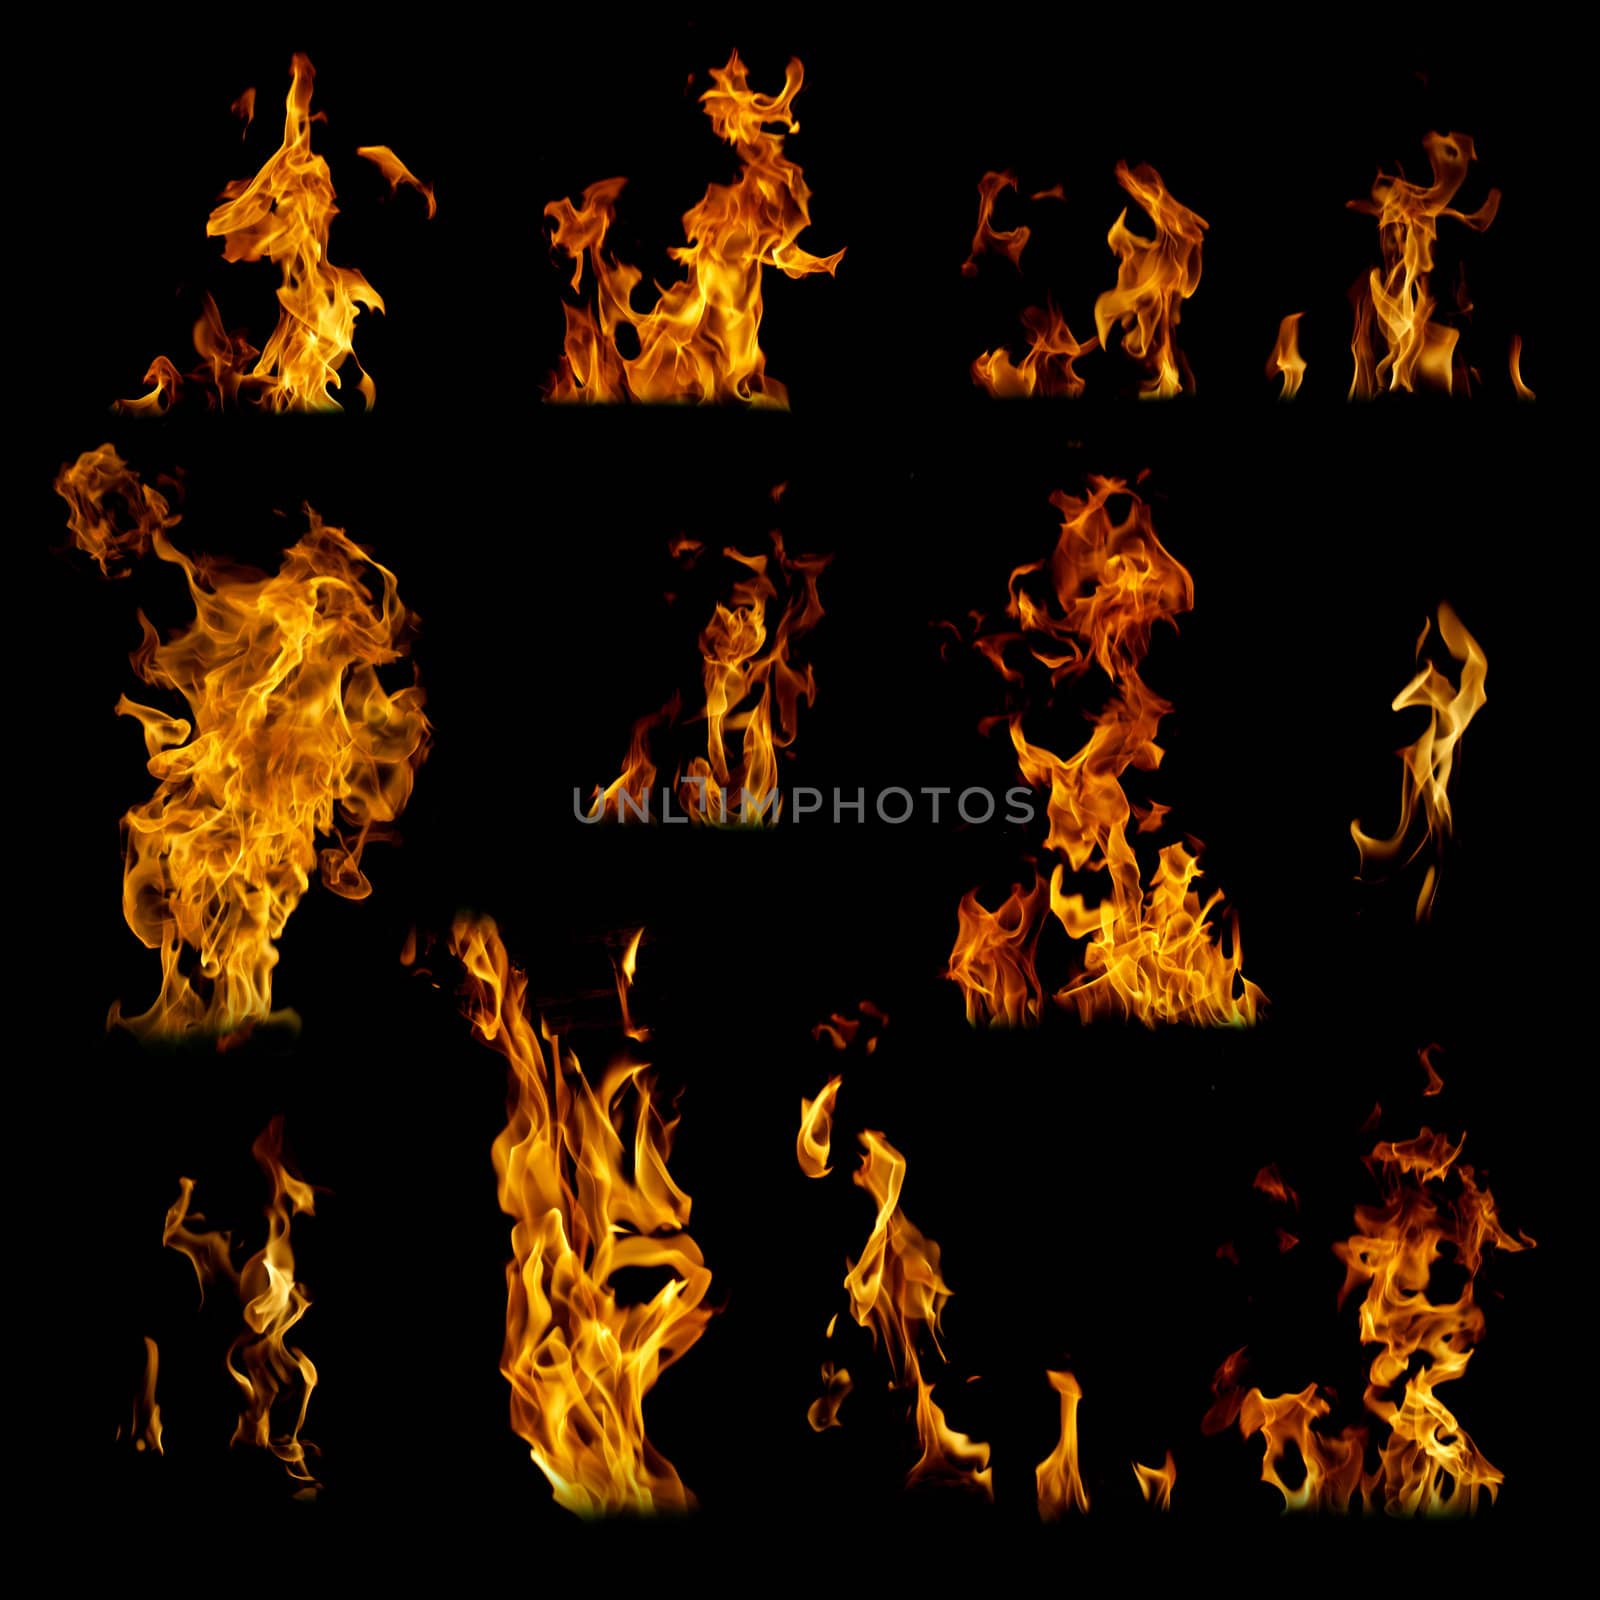 Assorted Flames by melpomene